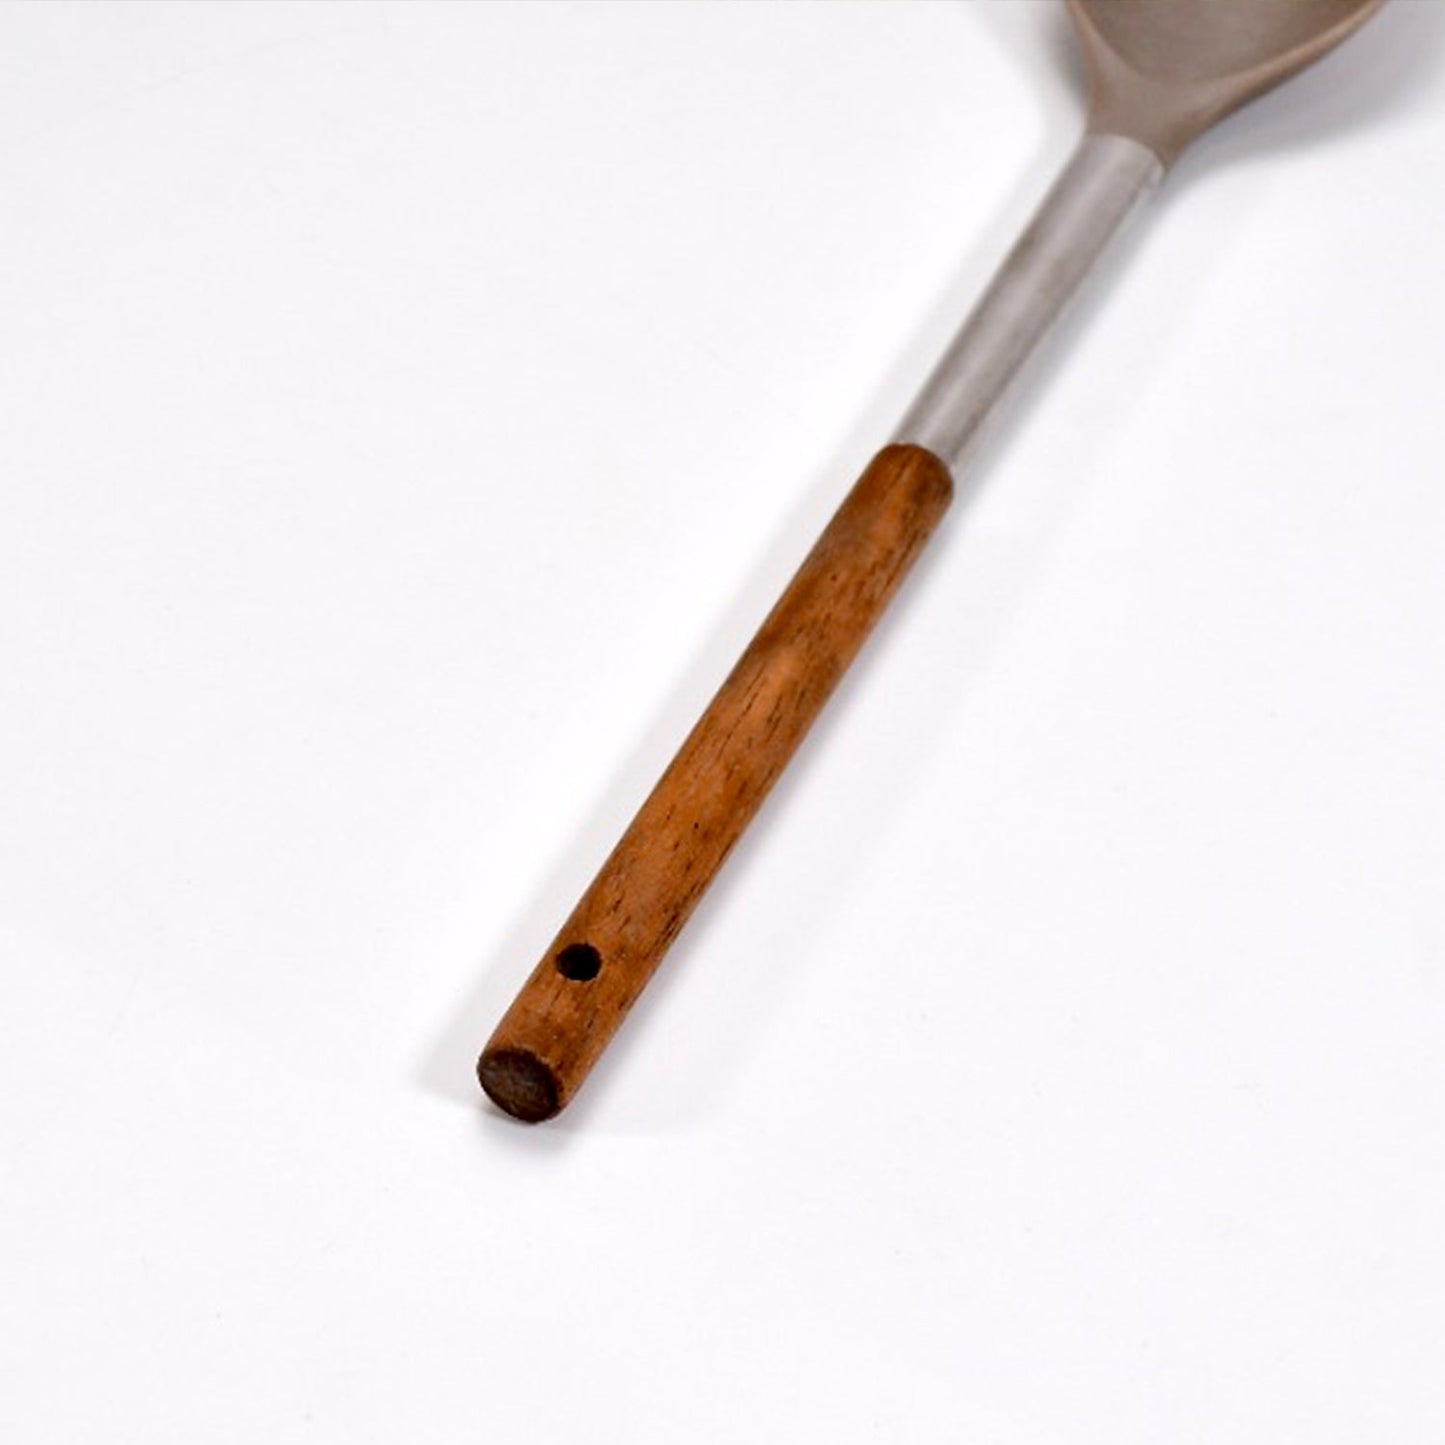 2845 Plastic Kitchen Wooden Handle Hand Held Safe Anti-rust Washable Reusable Cookware Indoor Cooking Tools DukanDaily